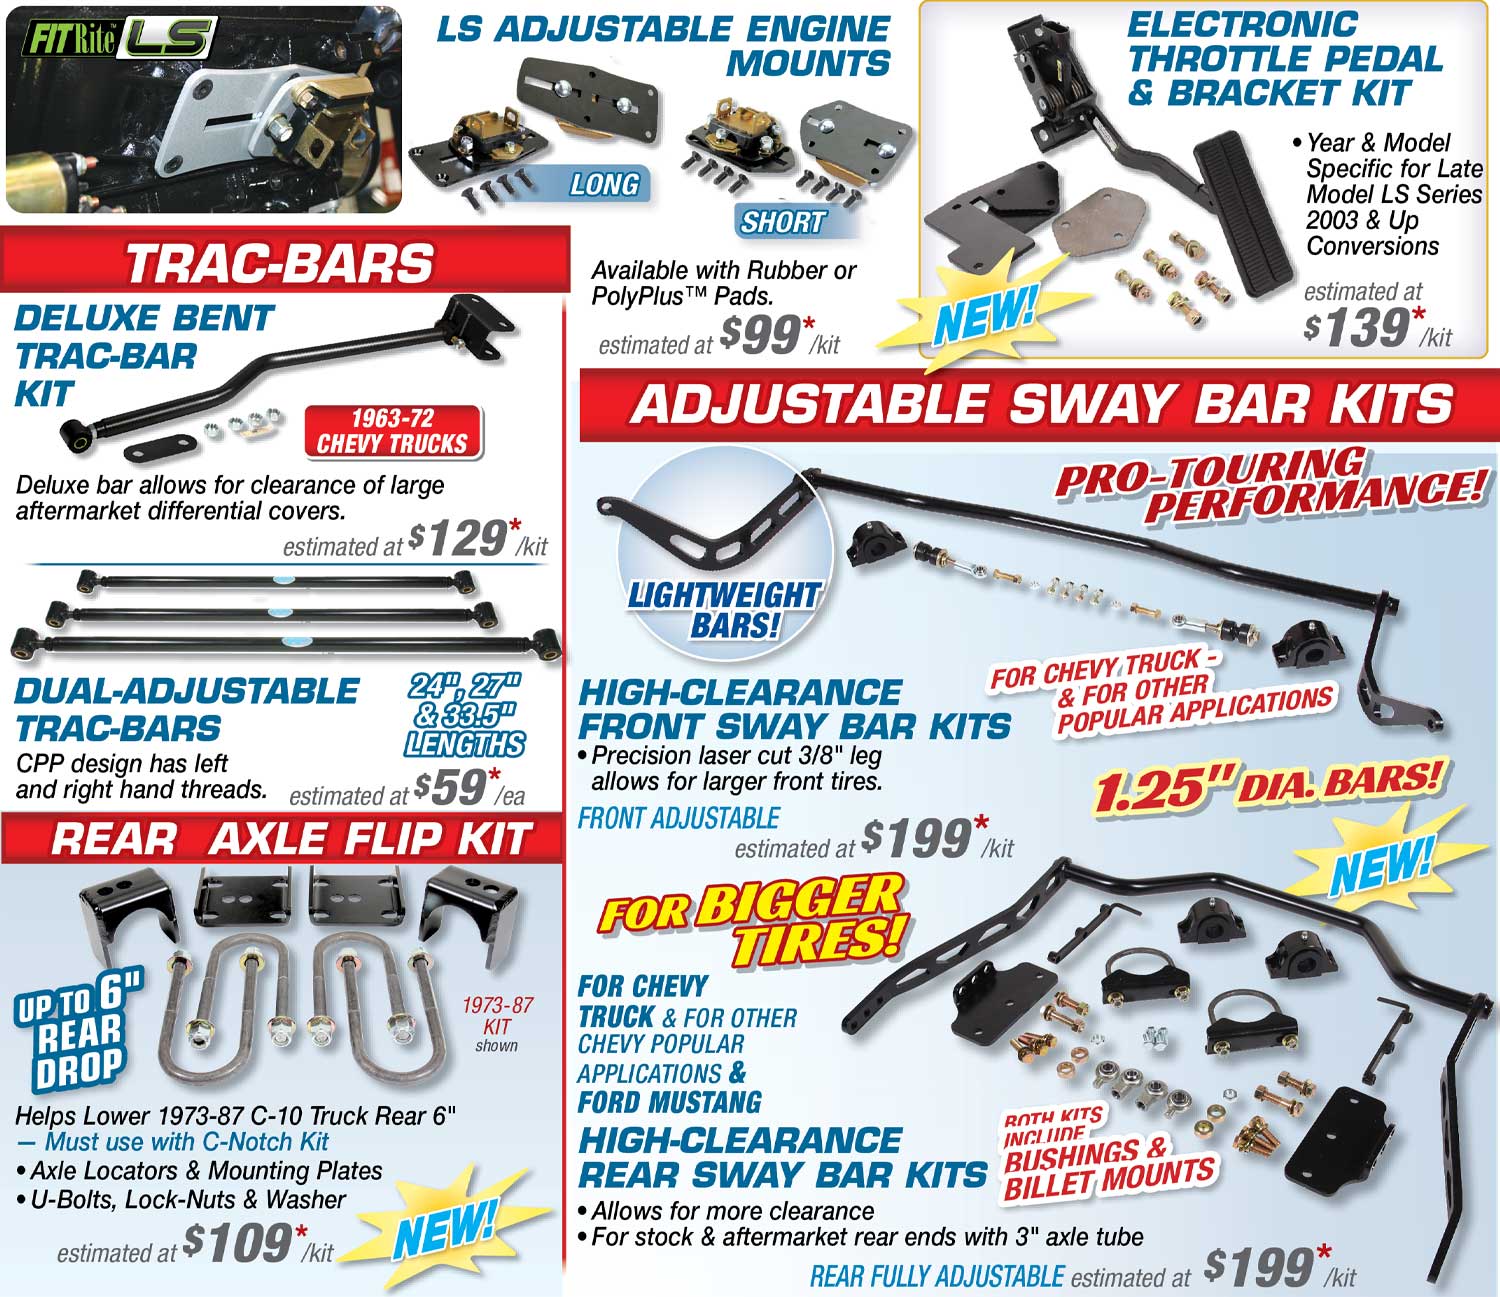 Trac-Bars, Rear Axle Flip Kit, Adjustable Sway Bar Kits